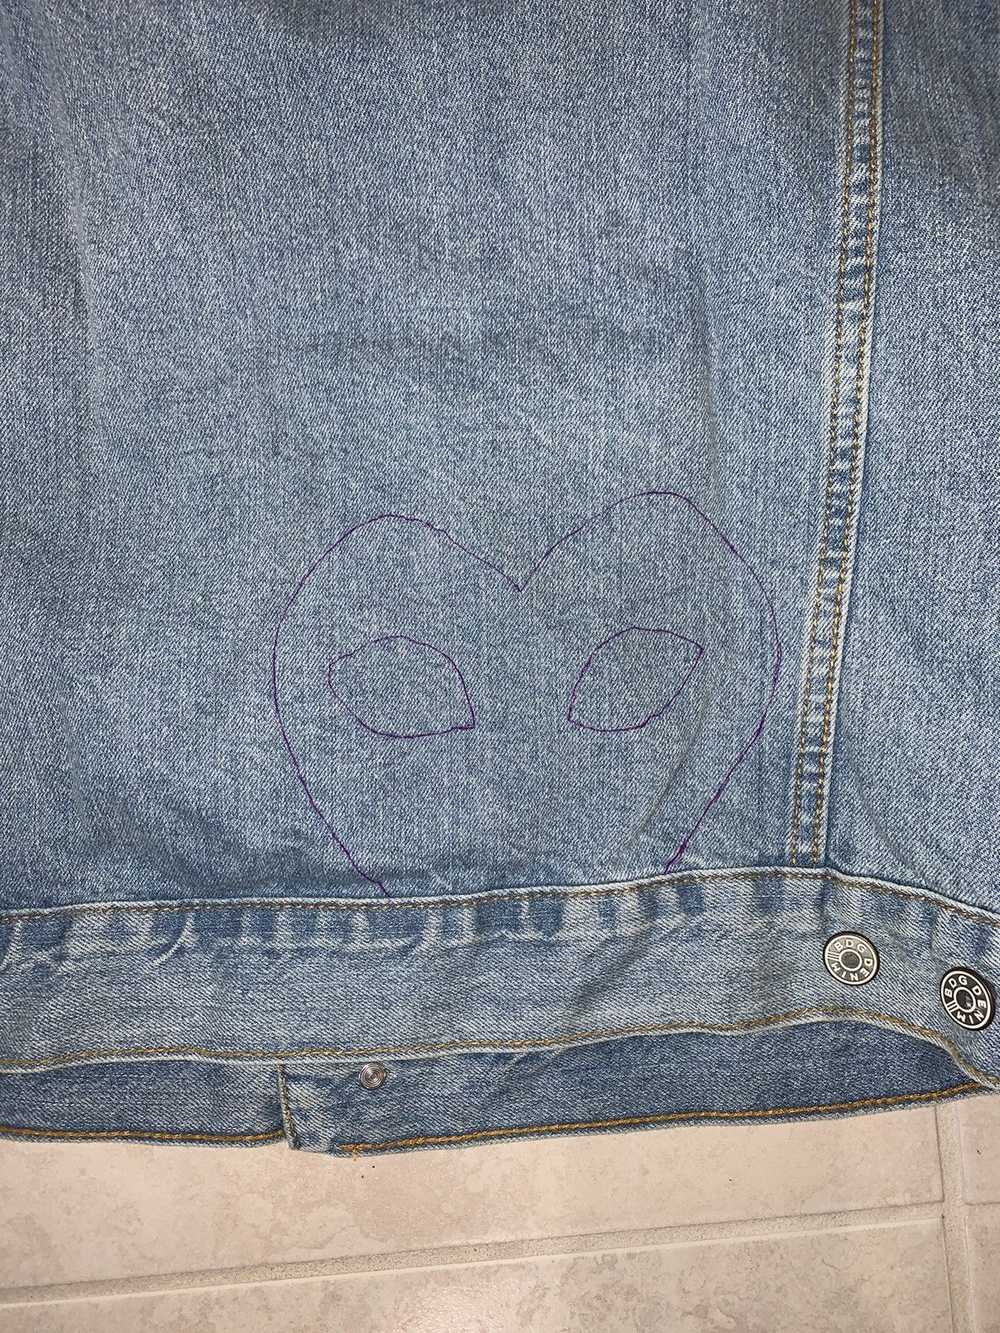 Bdg × Urban Outfitters BDG Pinstripe Denim Jacket - image 5